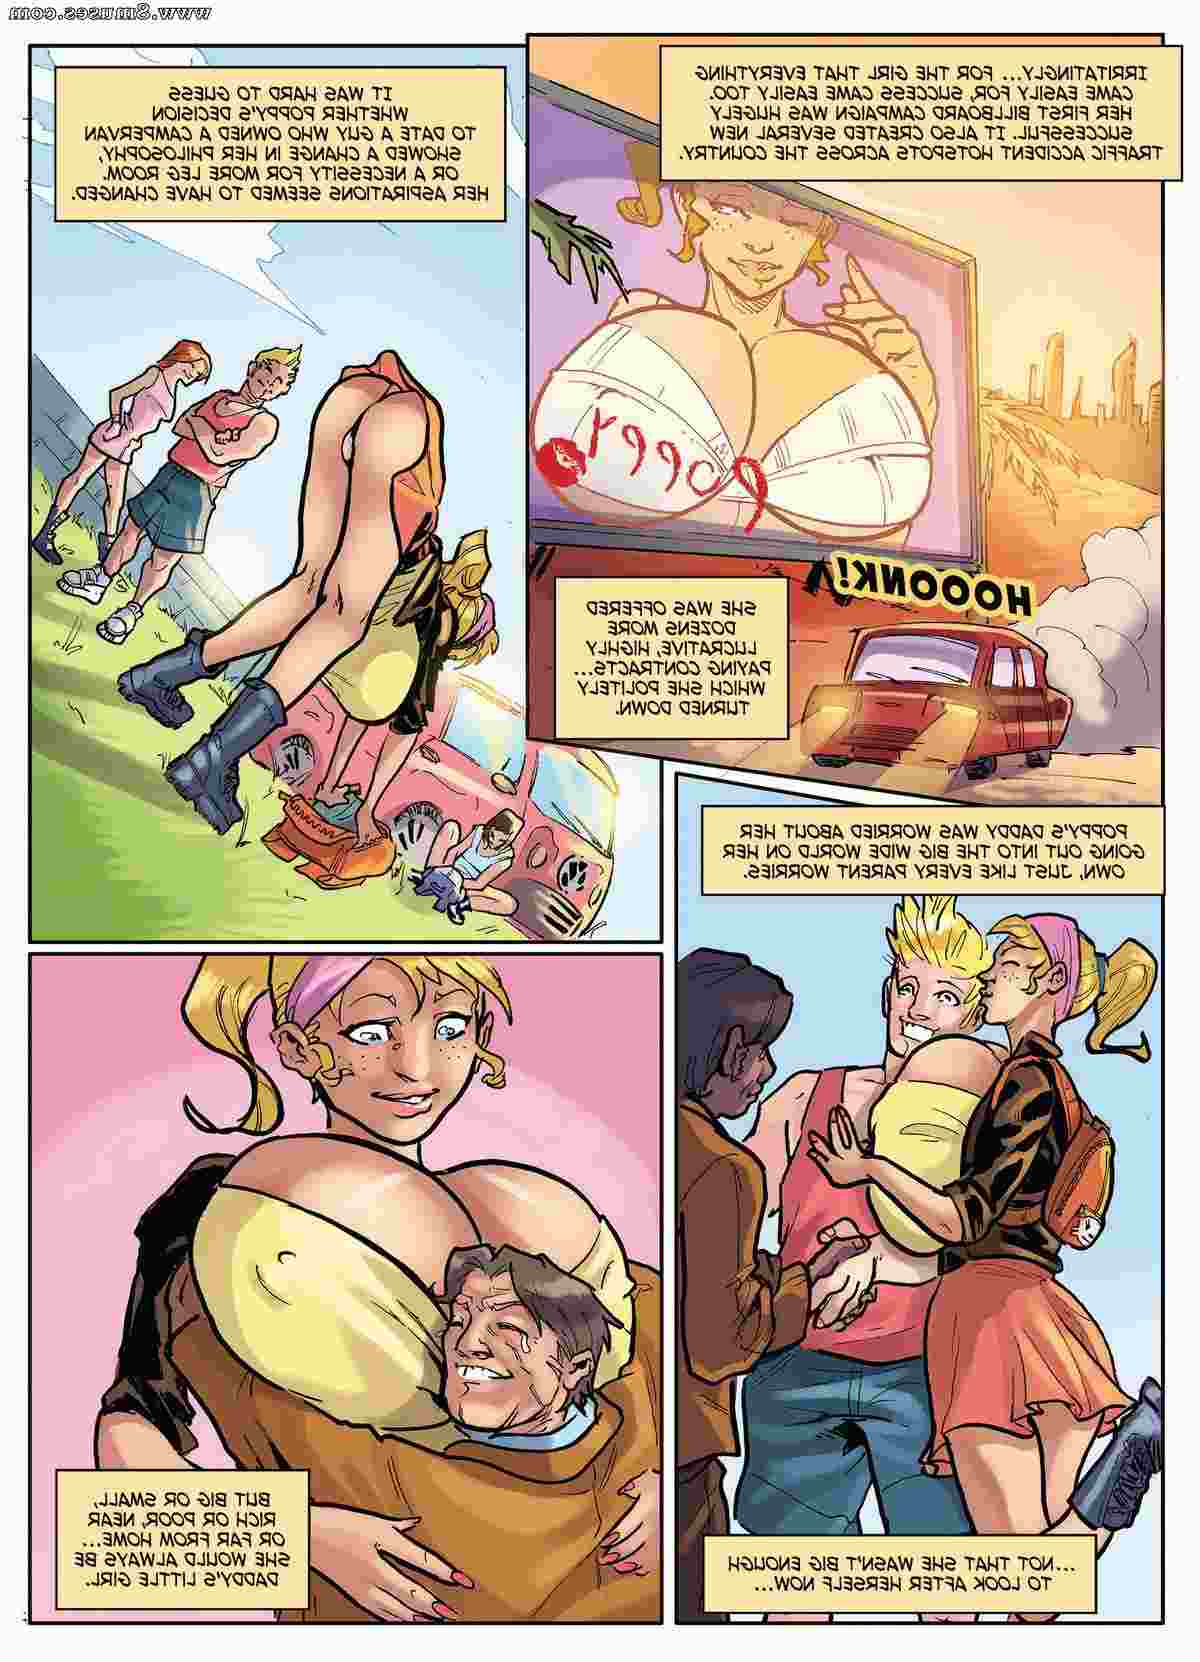 Expansionfan-Comics/Material-Girl Material_Girl__8muses_-_Sex_and_Porn_Comics_17.jpg